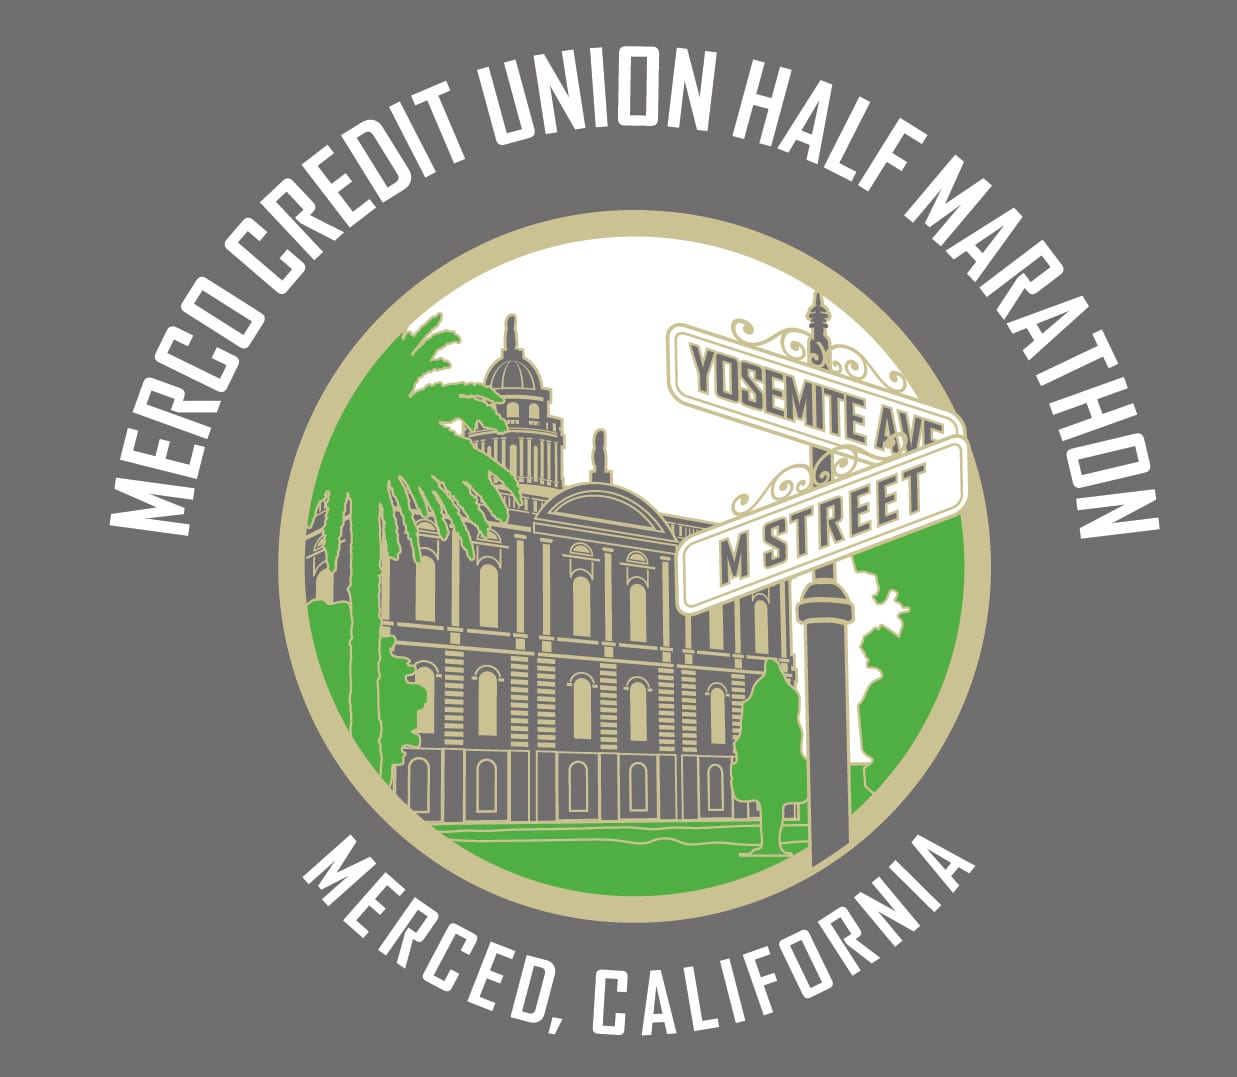 Merco Credit Union Half Marathon logo on RaceRaves